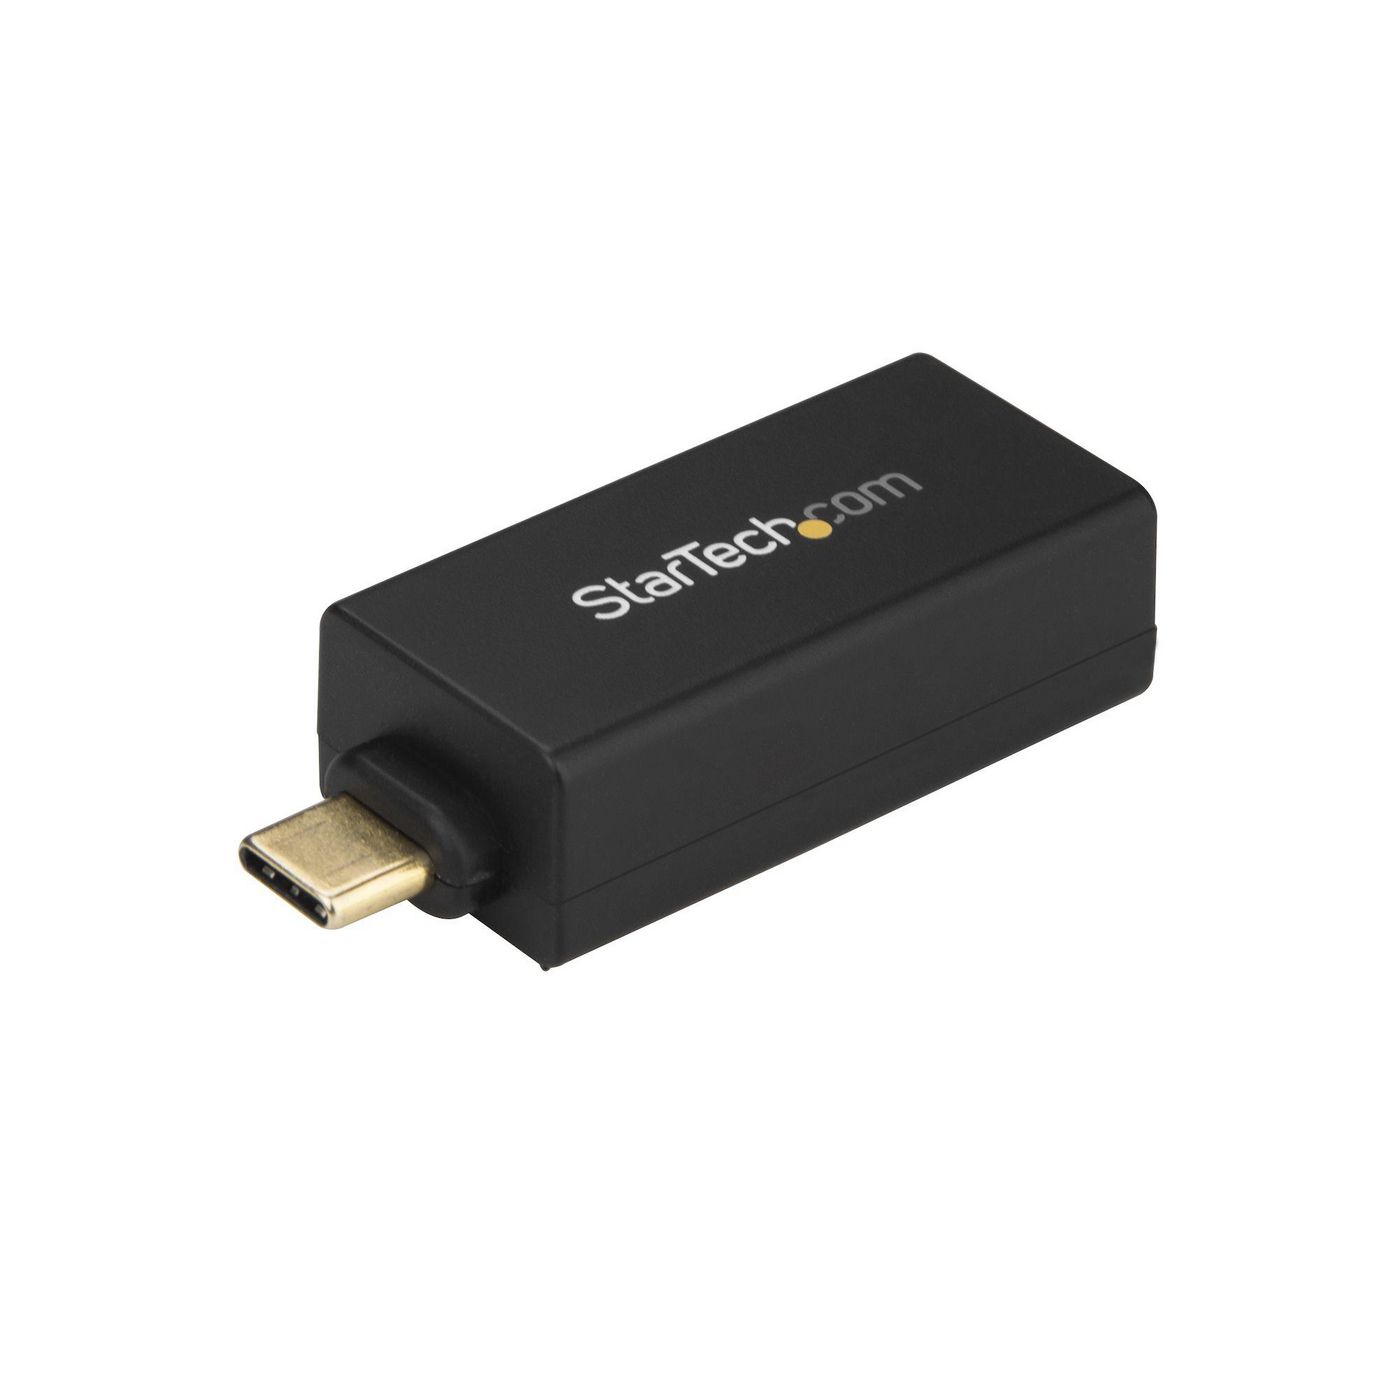 STARTECH.COM USB-C auf Gigabit Ethernet Adapter - USB 3.0 - USB C zu GbE Adapter - USB Typ-C Netzwer